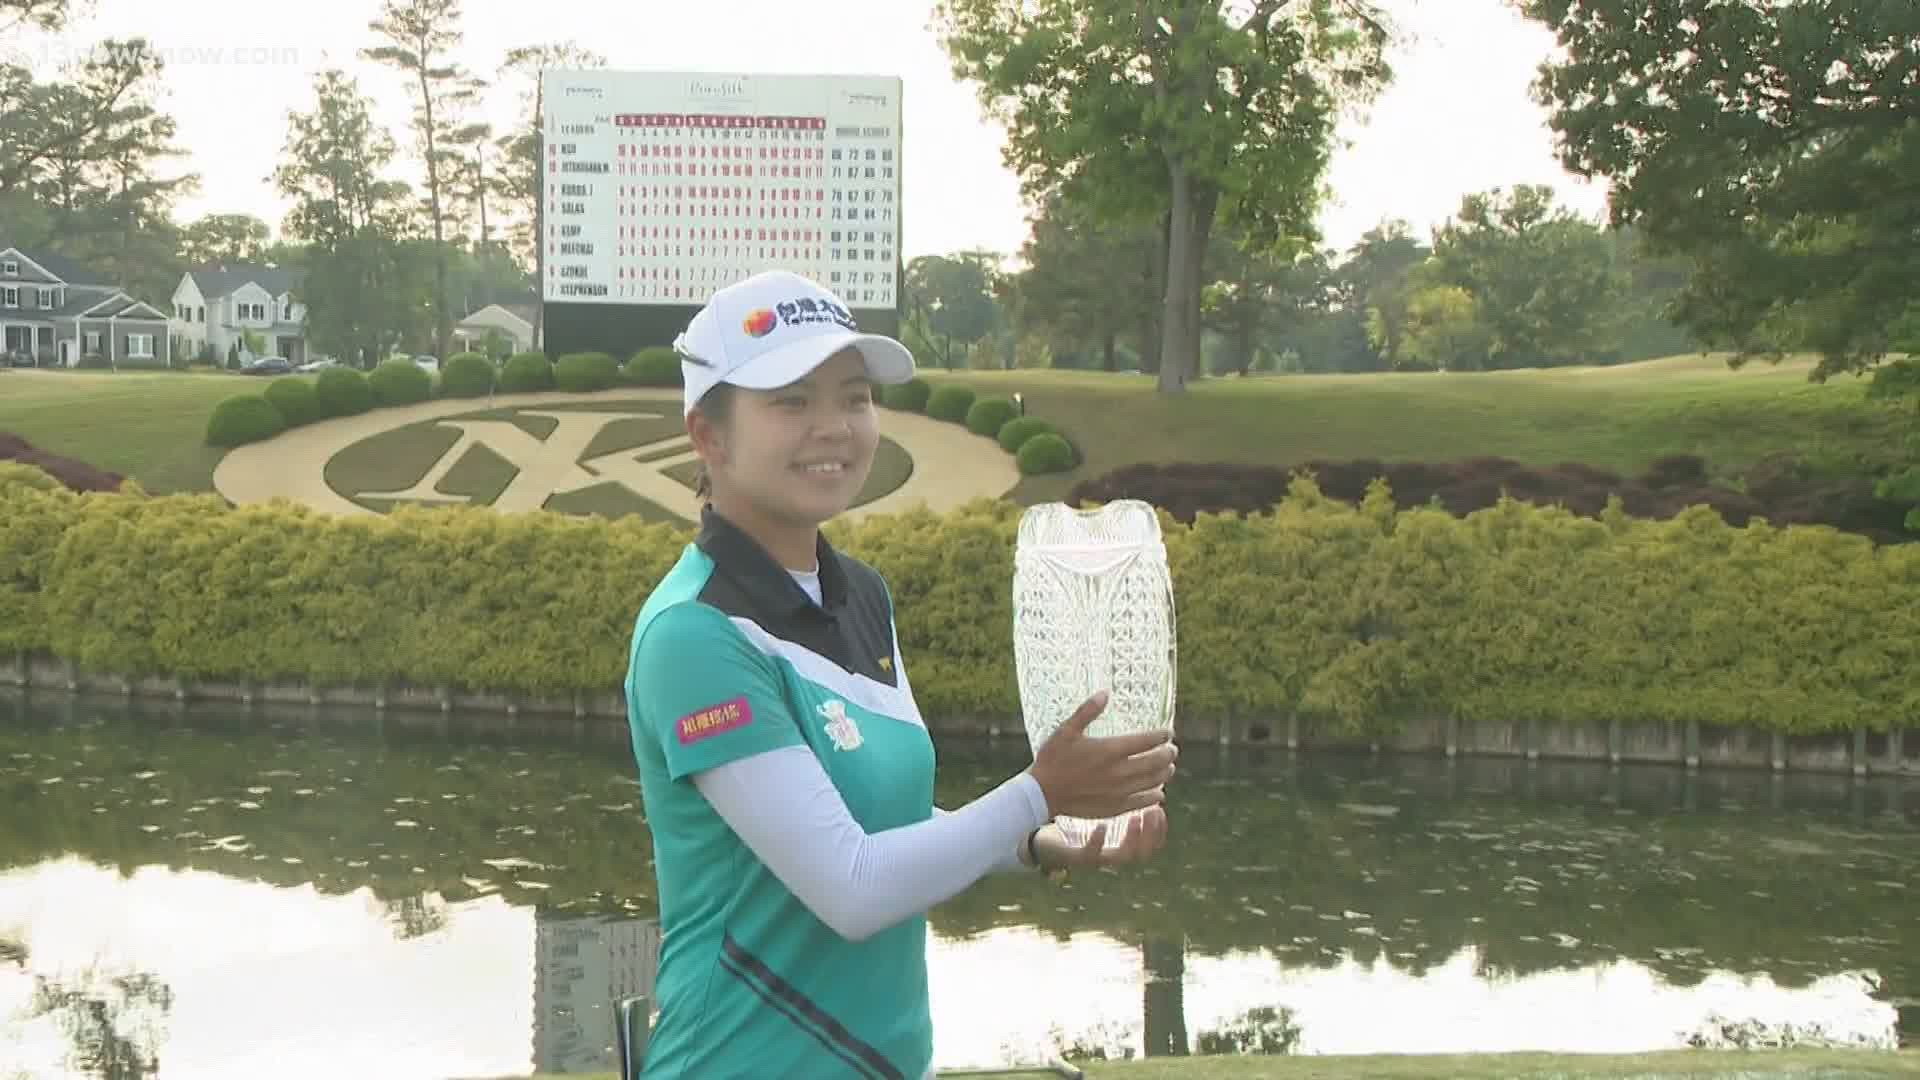 Hsu became the first Taiwanese player to win on the LPGA tour since Tseng Yani won the 2012 Kia Classic.